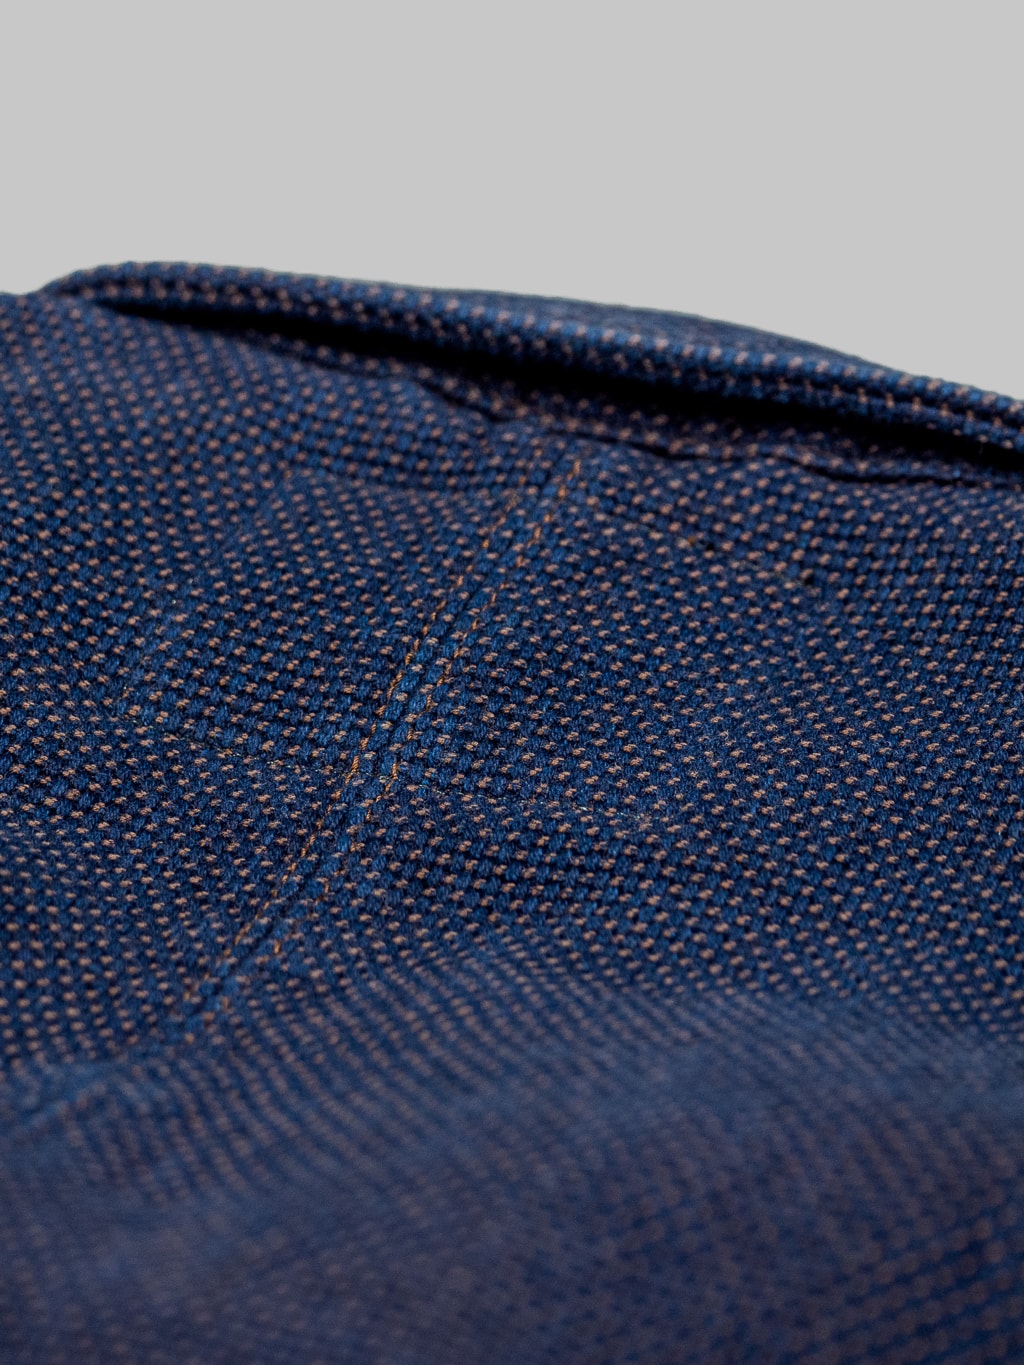 Studio Dartisan indigo kakishibu sashiko selvedge jacket irregular slubby texture